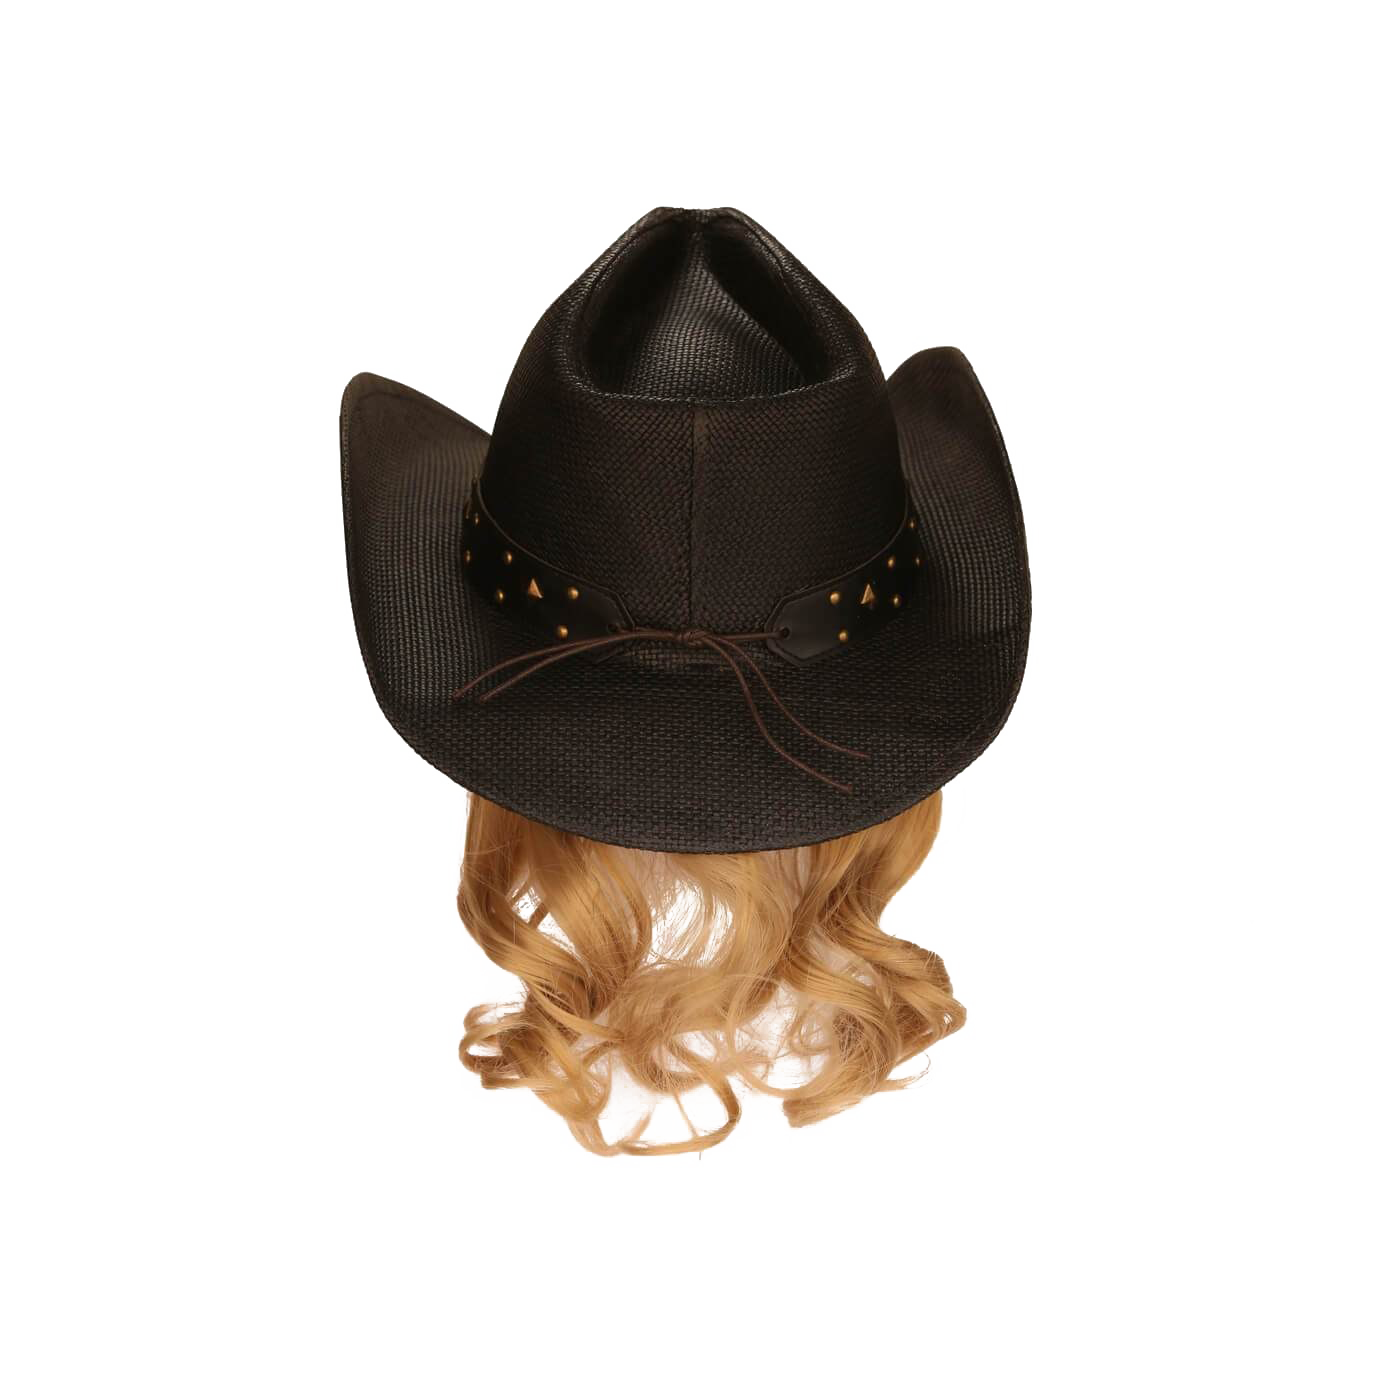 Cowboy Hat Download Free PNG